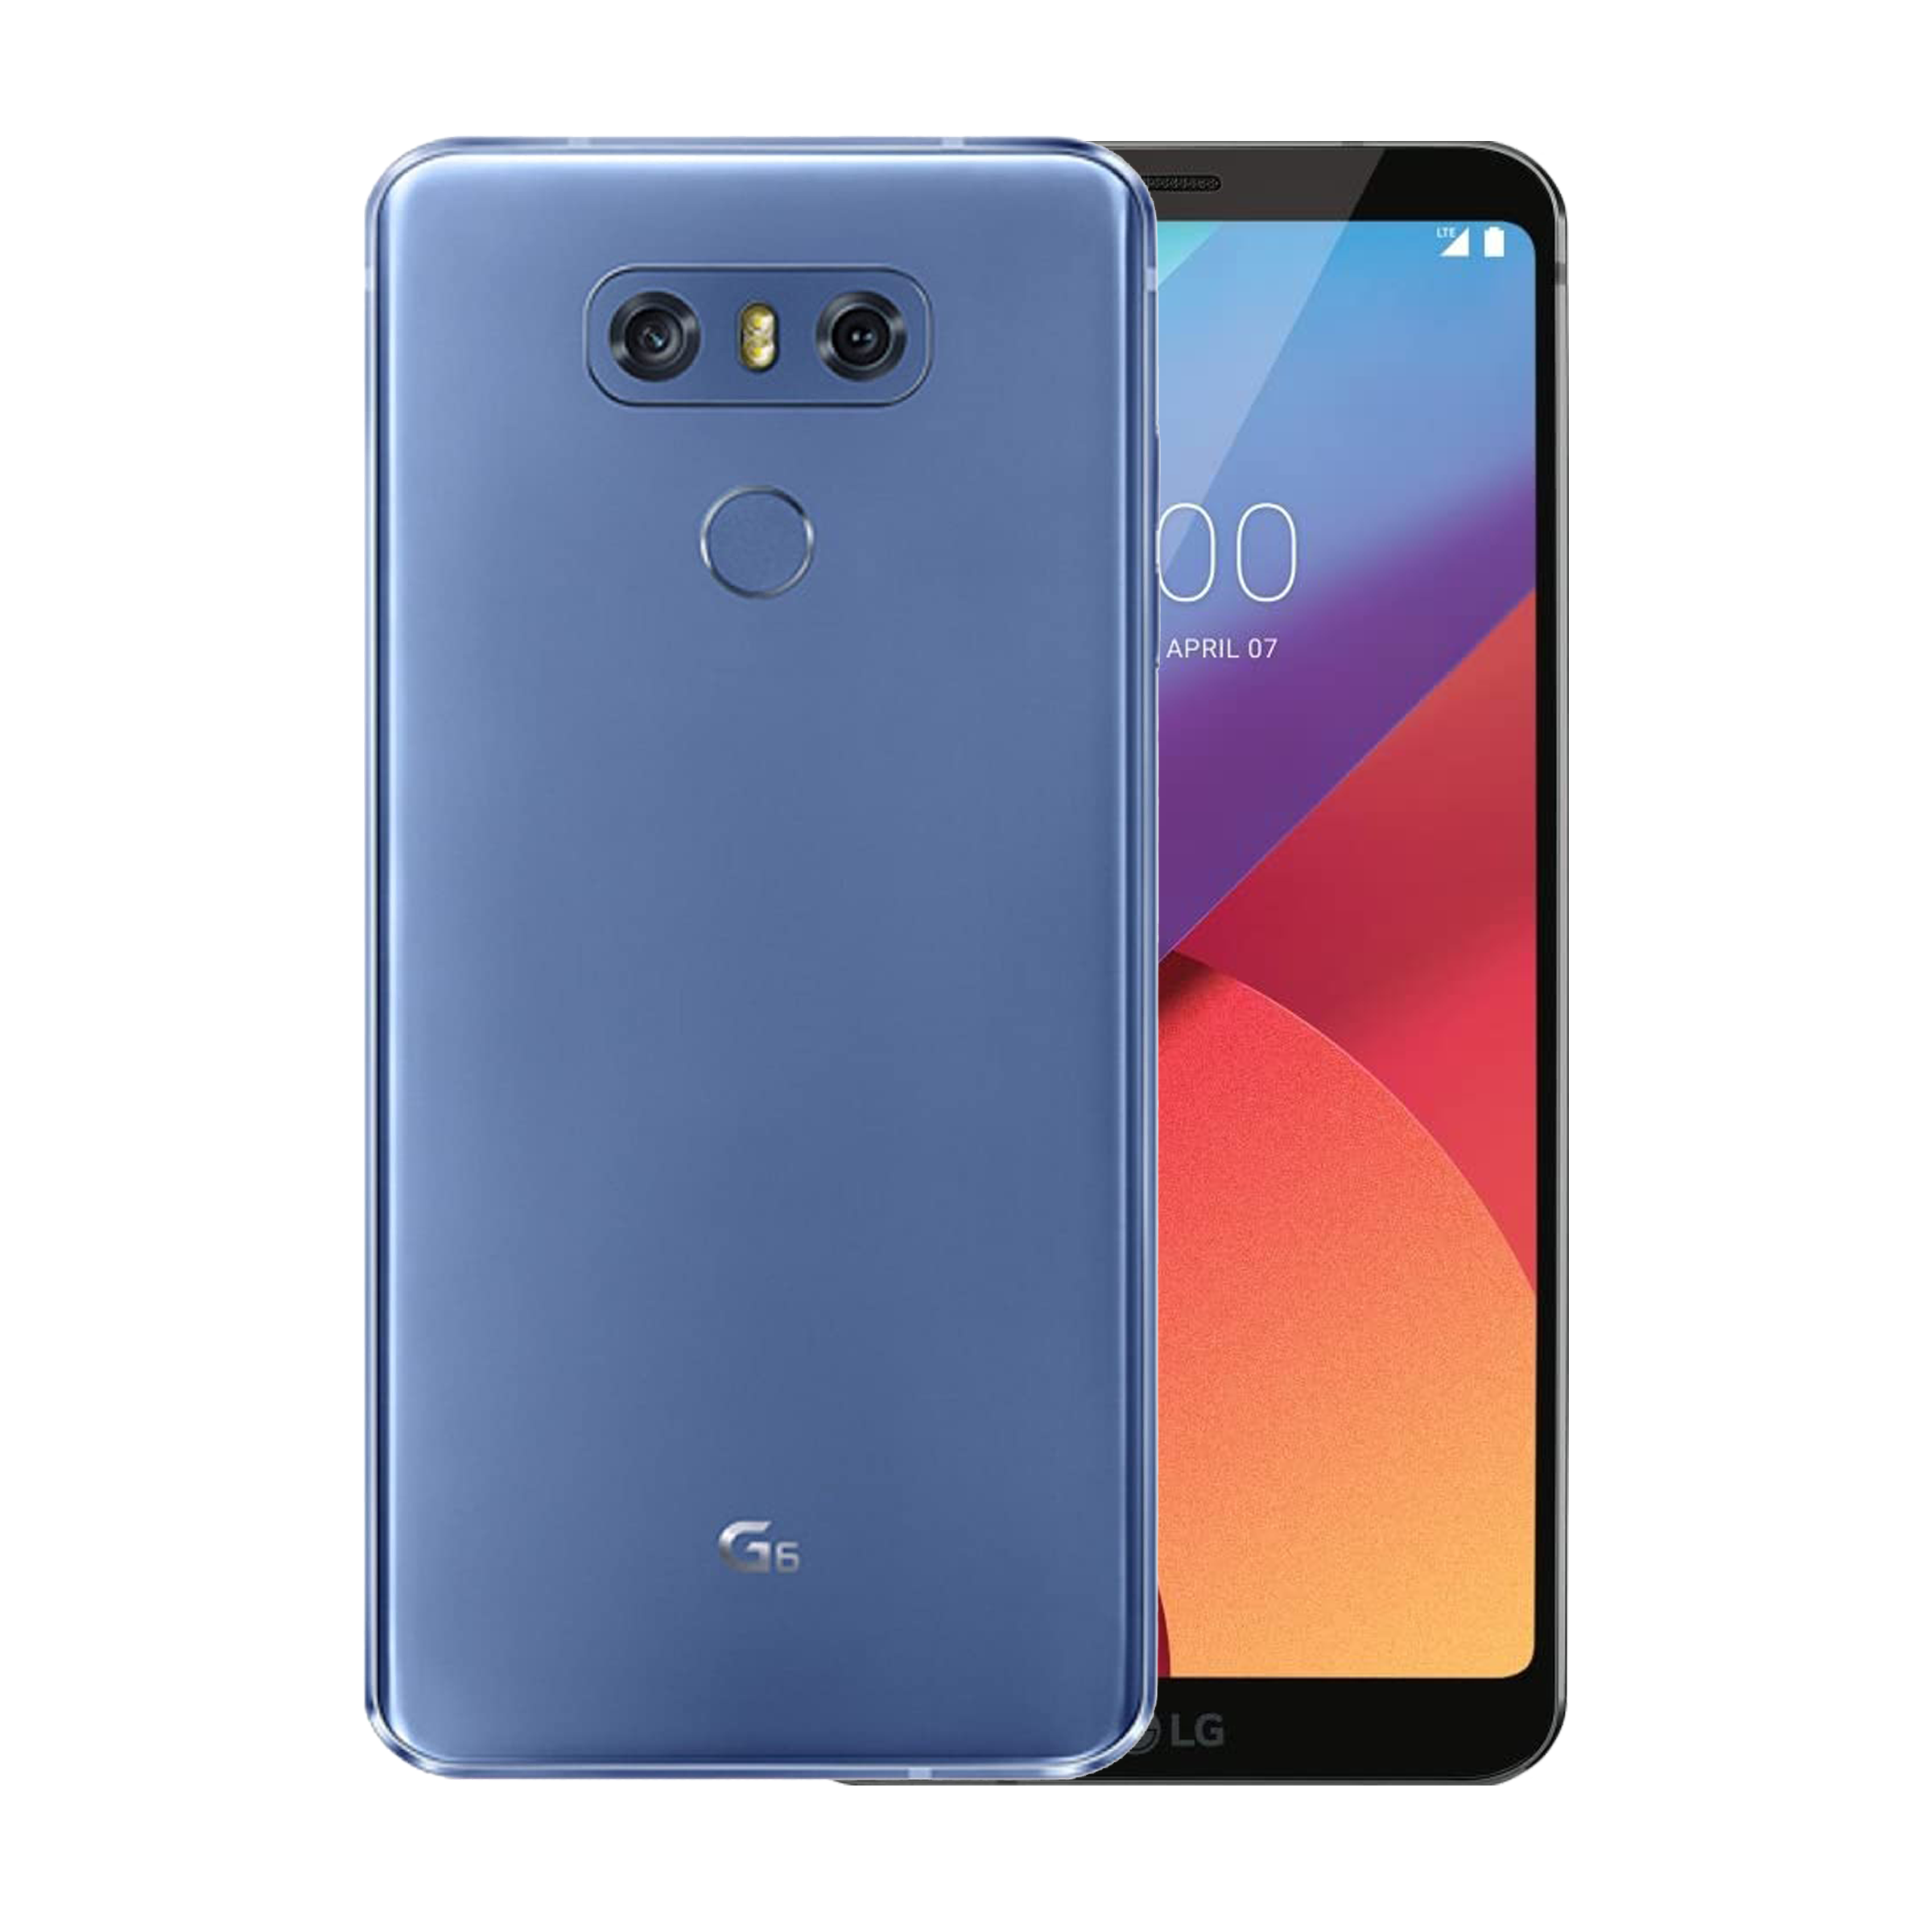 LG G6 Smartphone 32GB Blue Very Good - Unlocked 32GB Blue Very Good